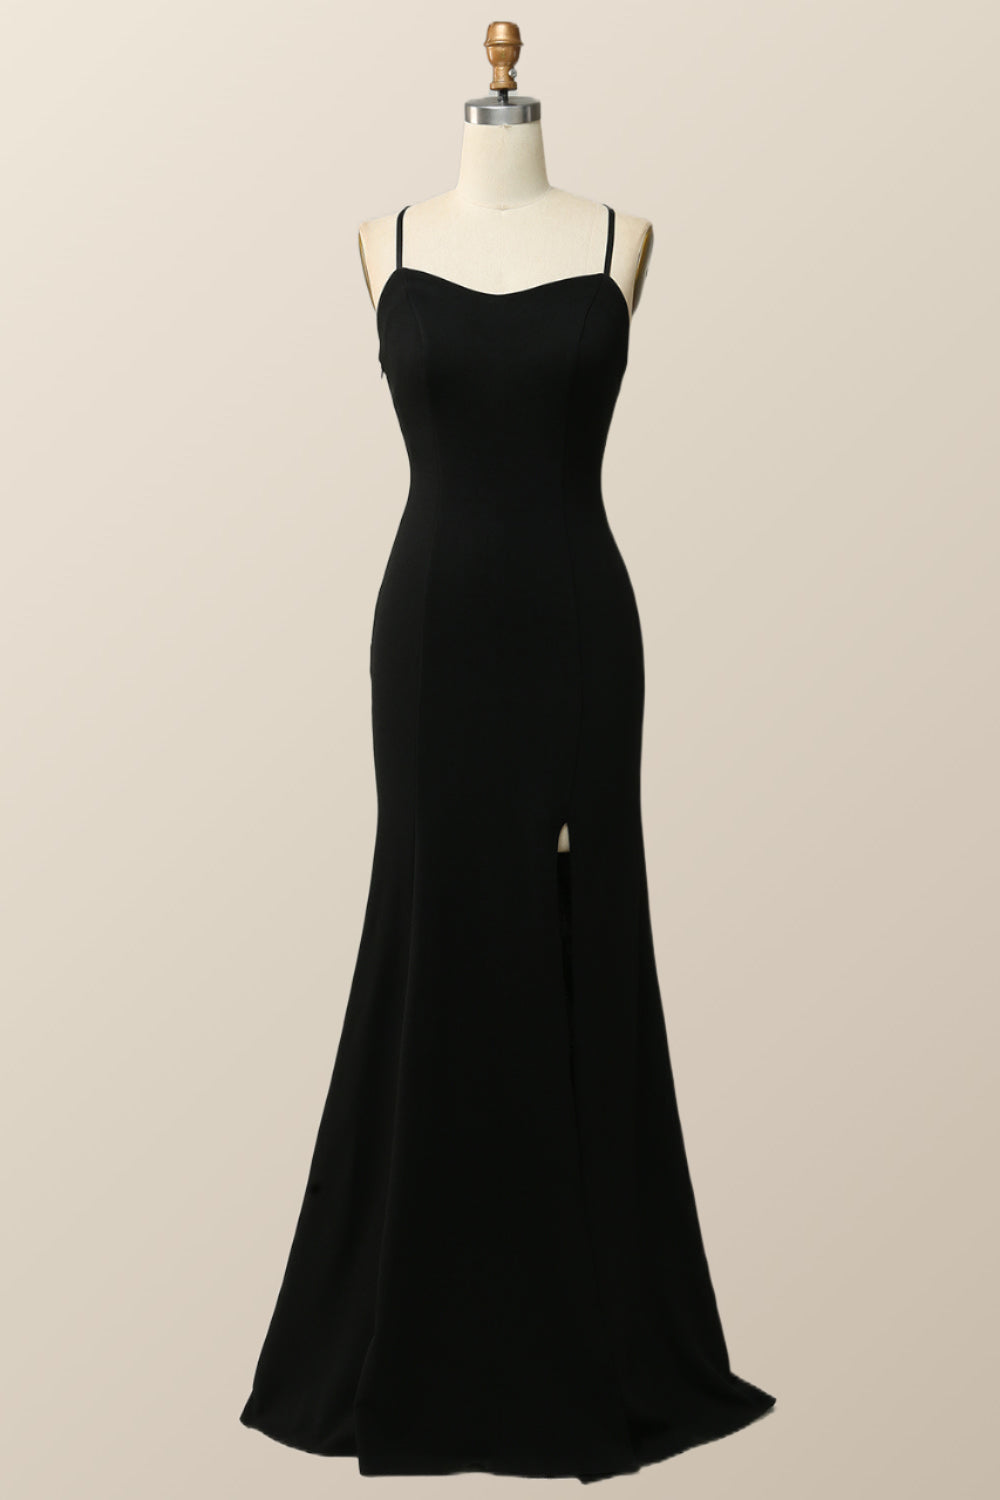 Simply Black Mermaid Long Dress with Slit